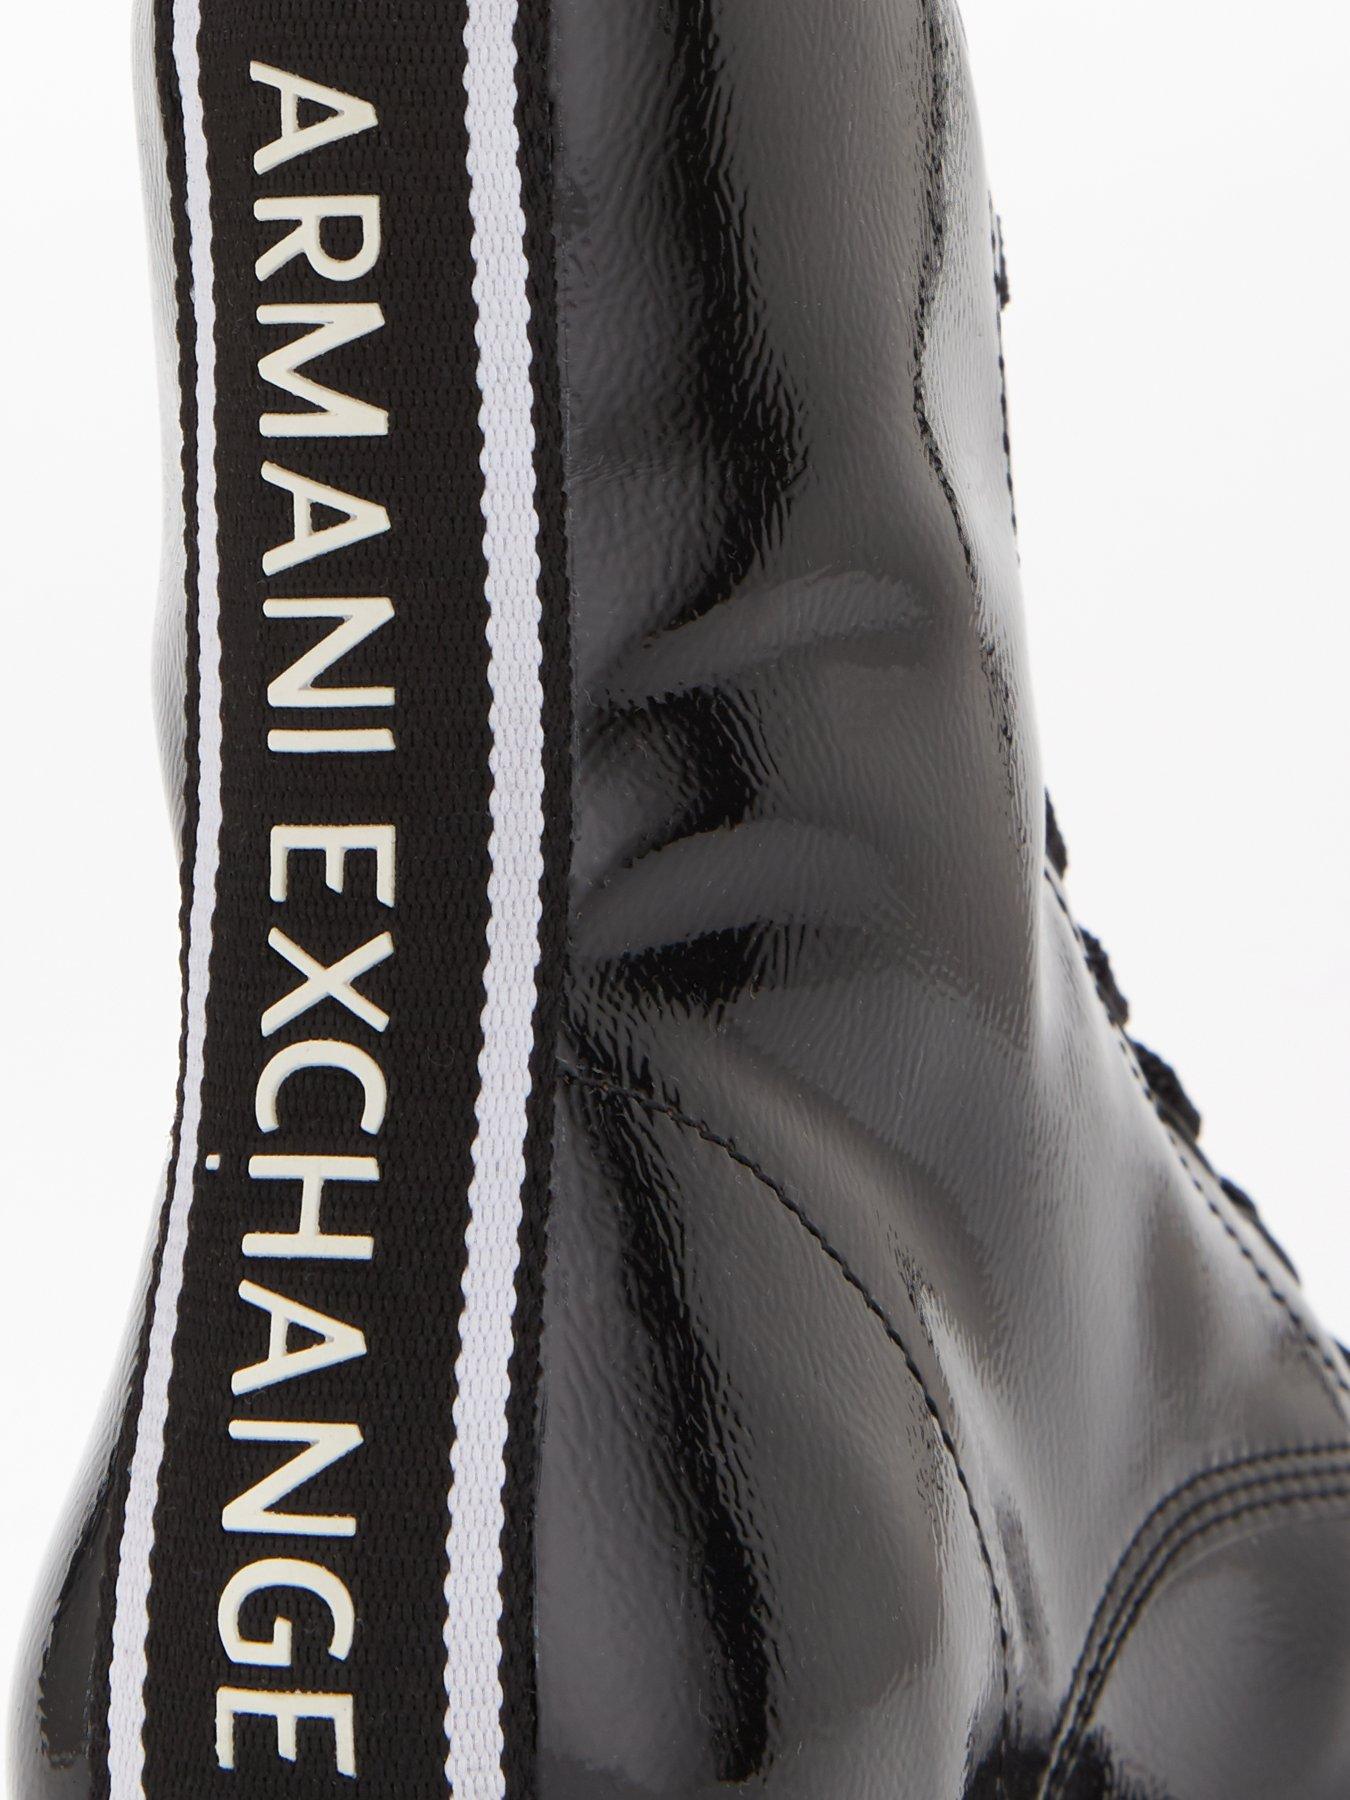  Armani Exchange Branded Tab Lace Up Biker Boots - Black